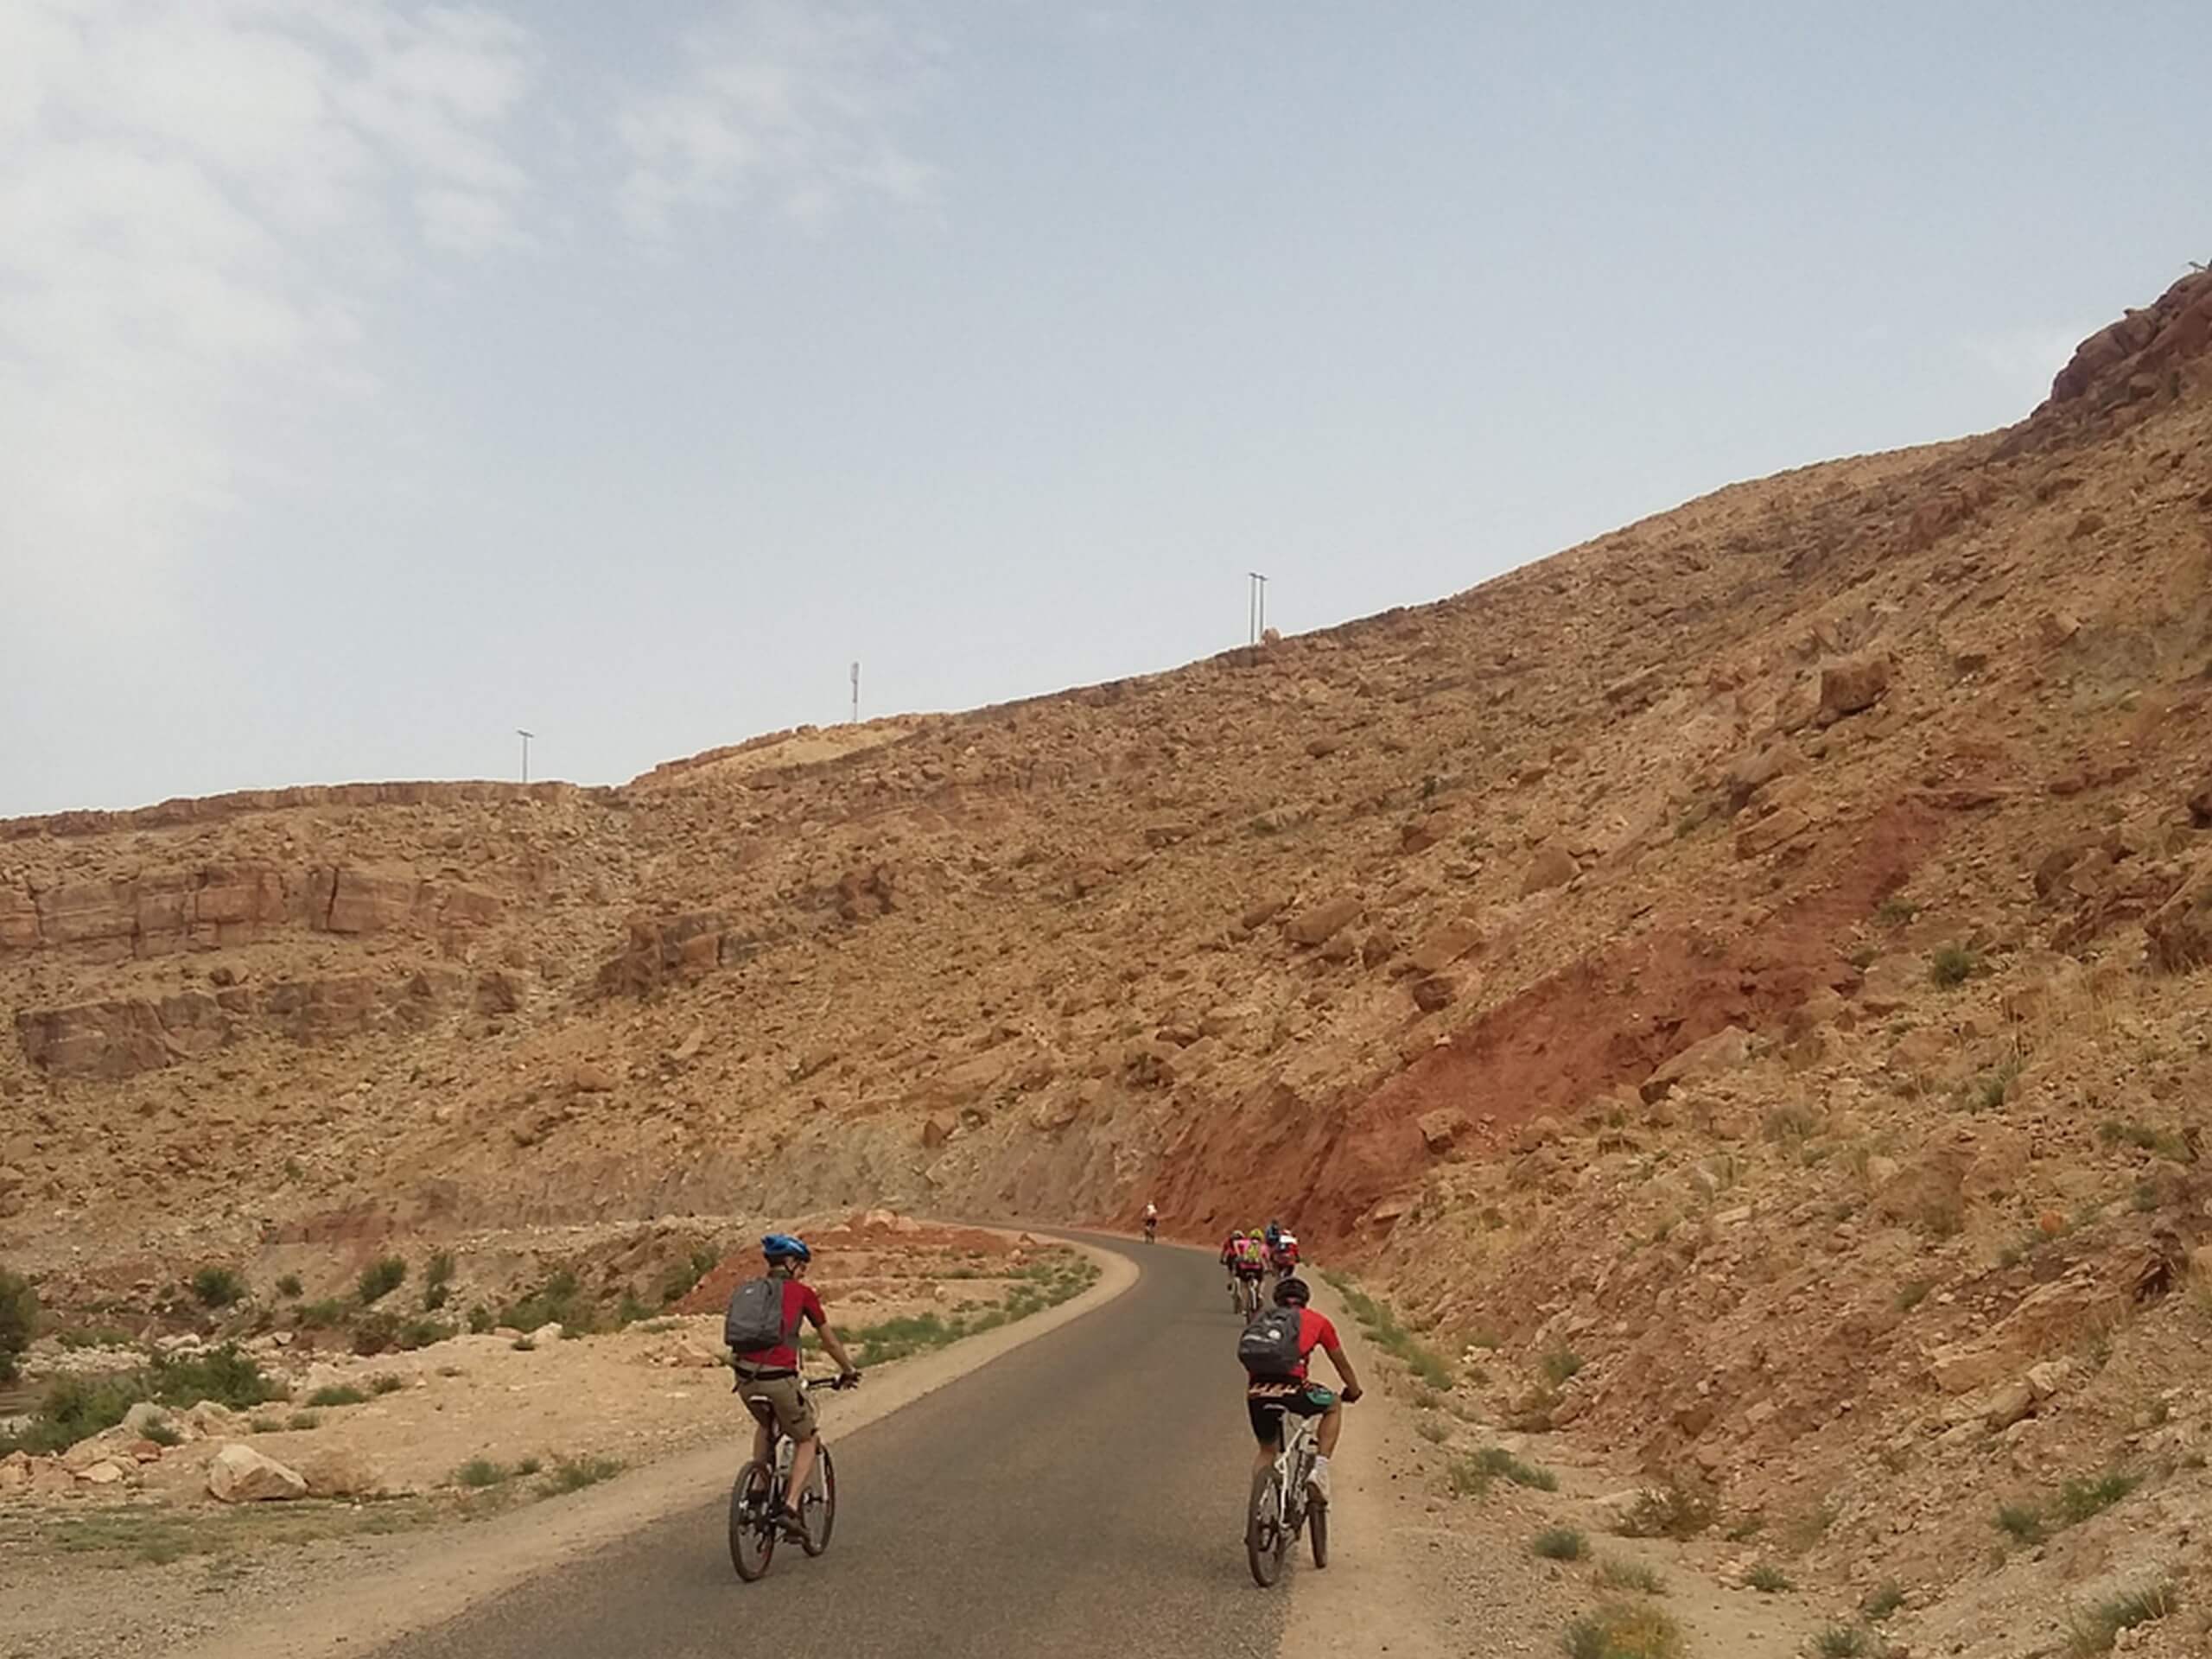 Exploring Morocco while on bike